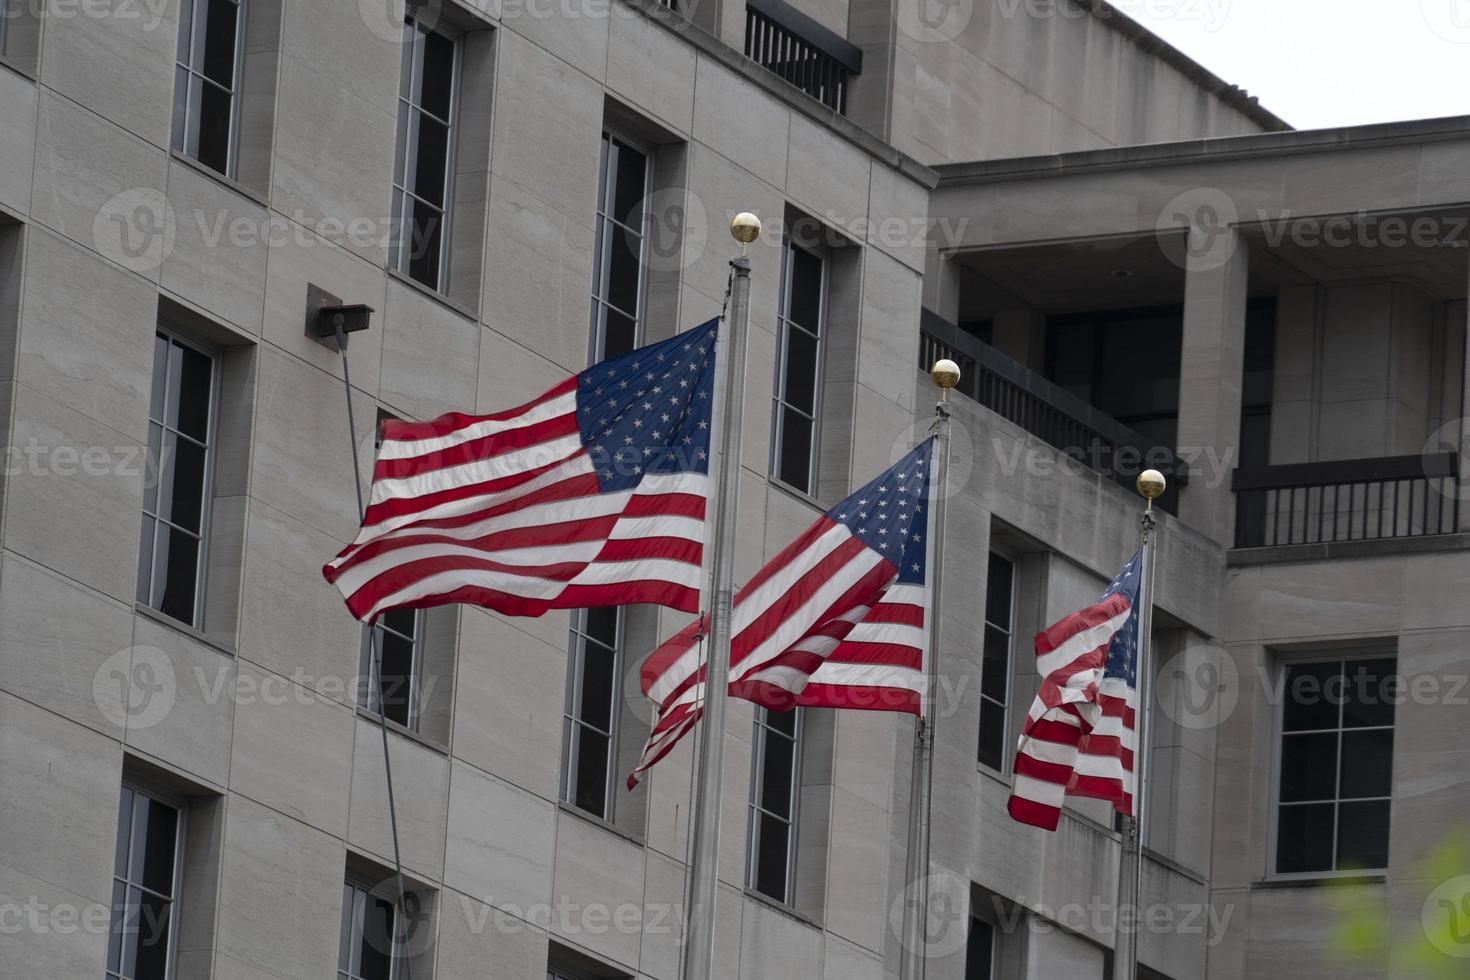 Washington dc 16th street buildings windows waving usa flag photo